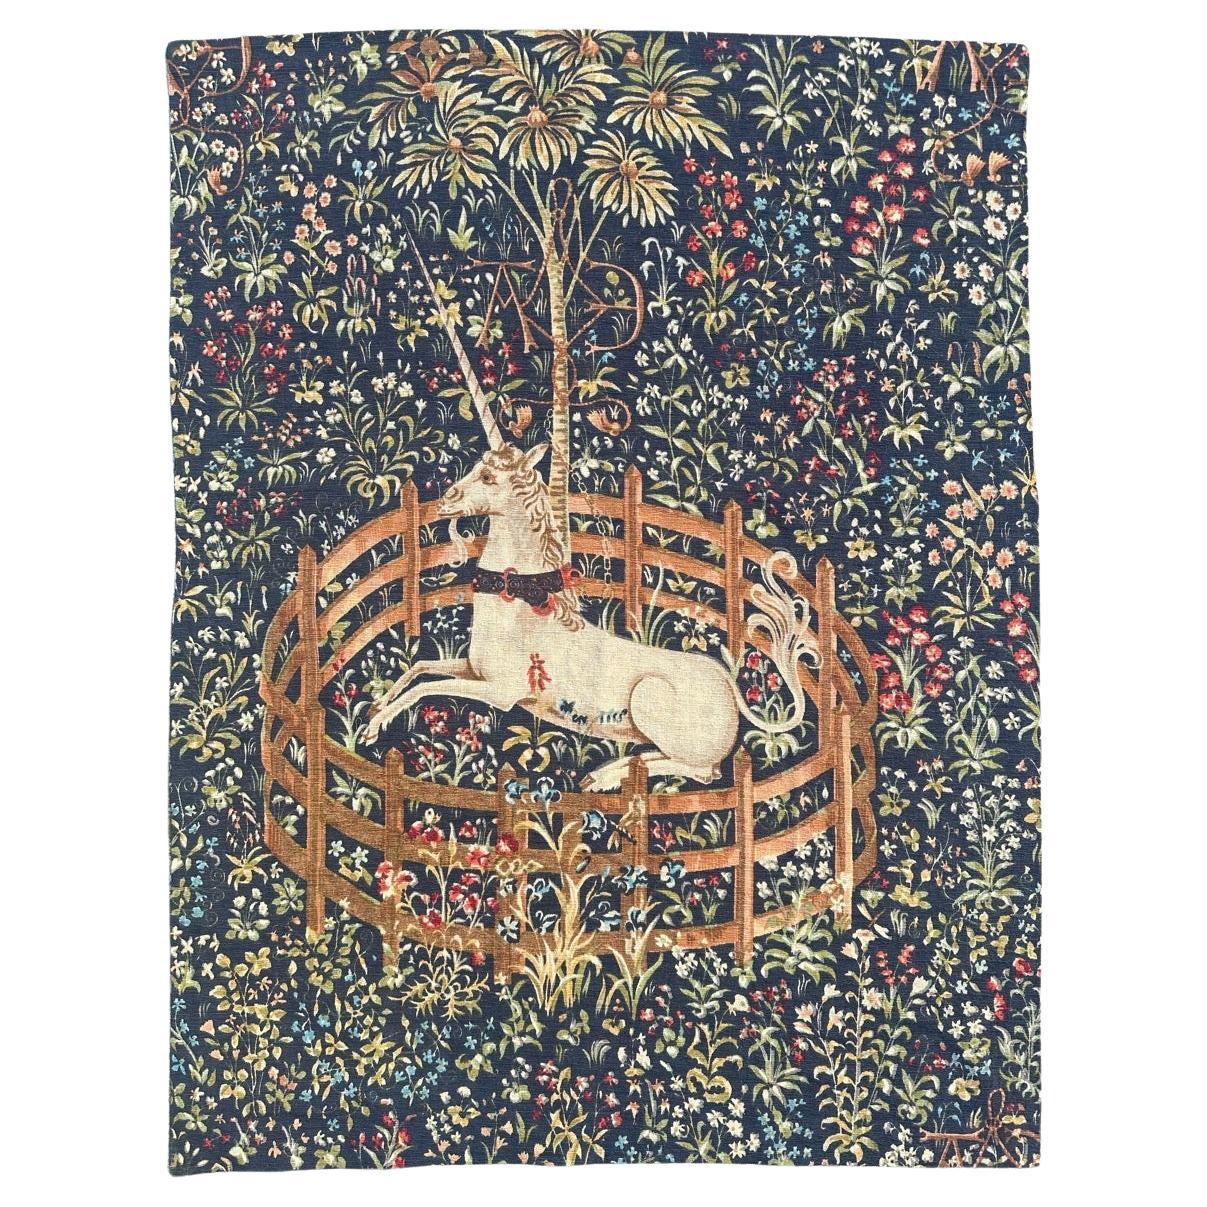 Bobyrug’s Wonderful Vintage French hand printed Tapestry « licorne captive » For Sale